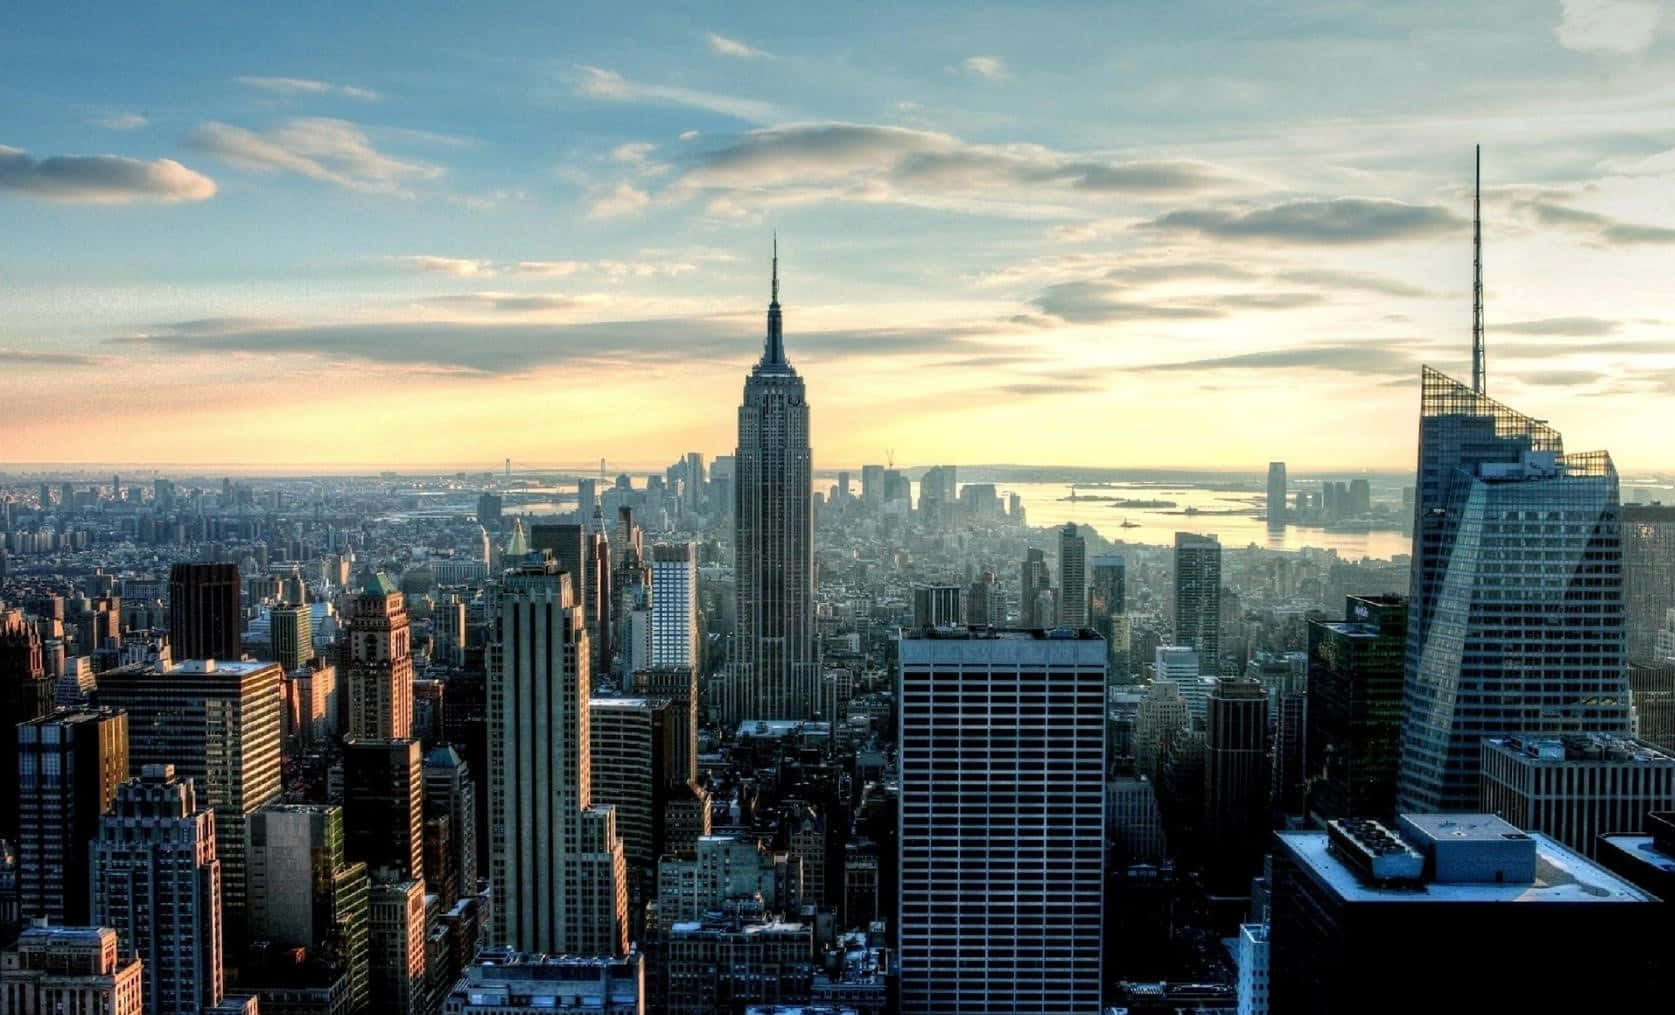 Enjoy the vibrant skyline of New York City